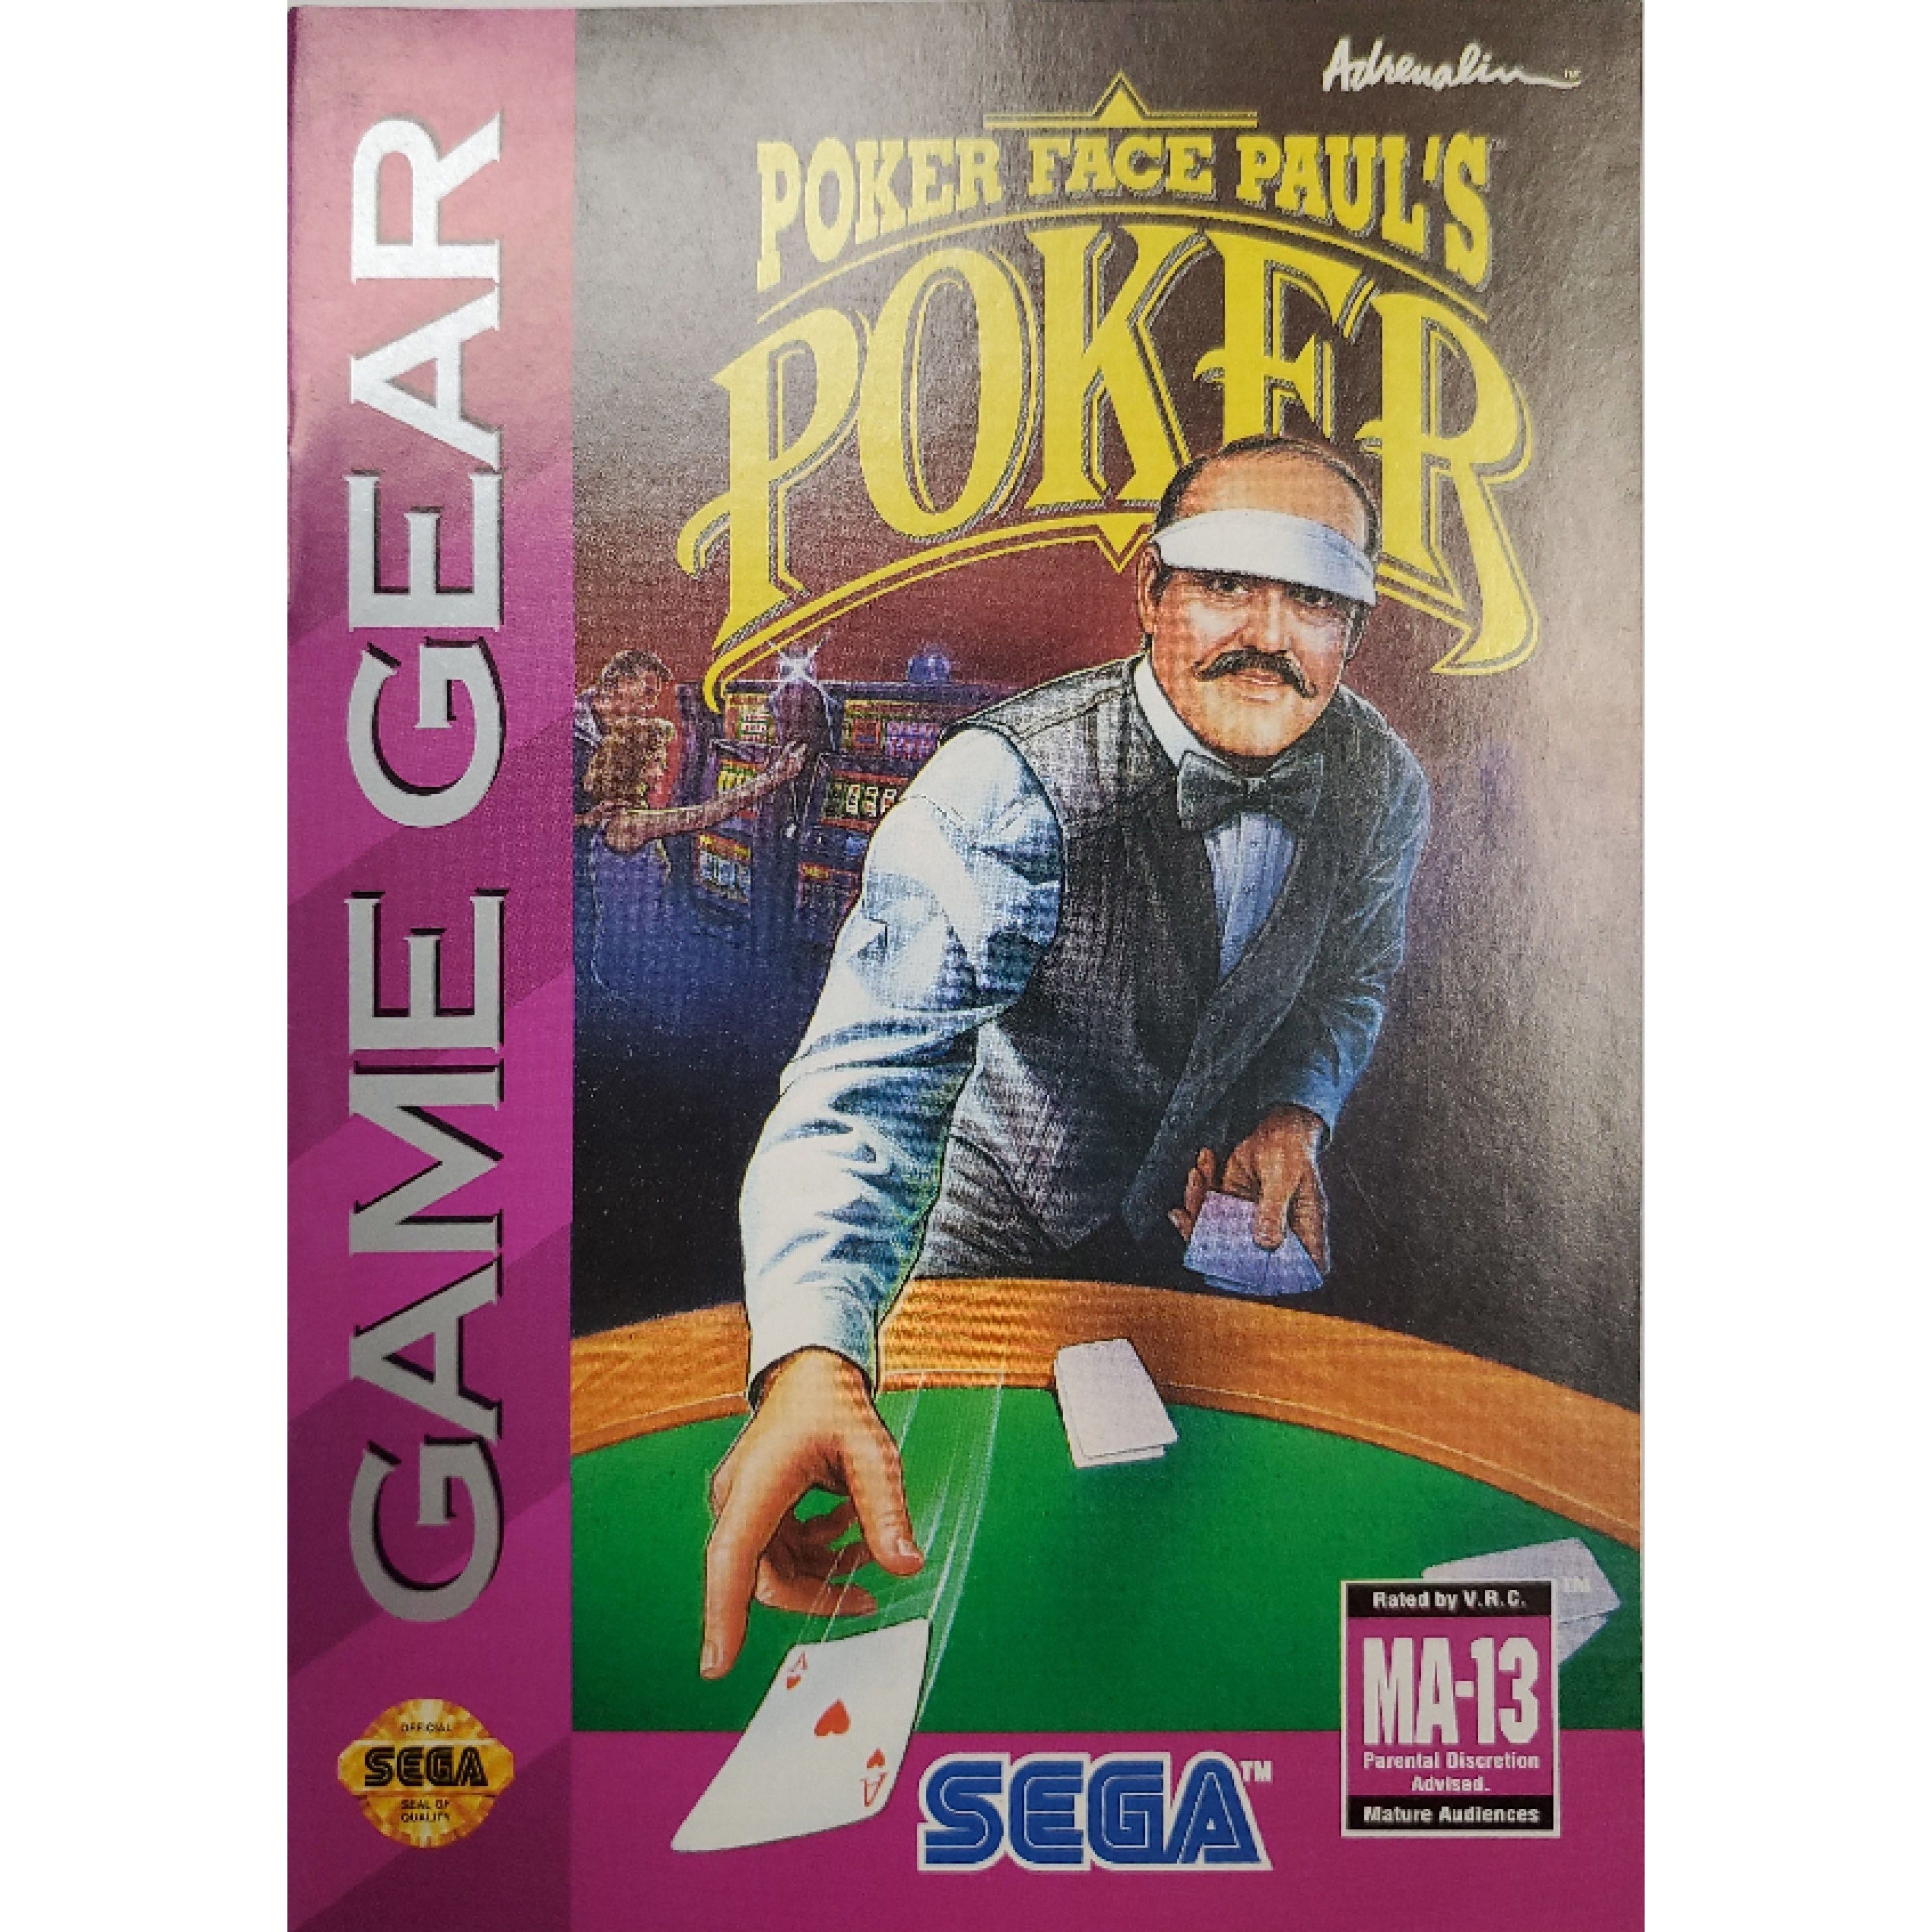 GameGear - Poker Face Paul's Poker (Manual)